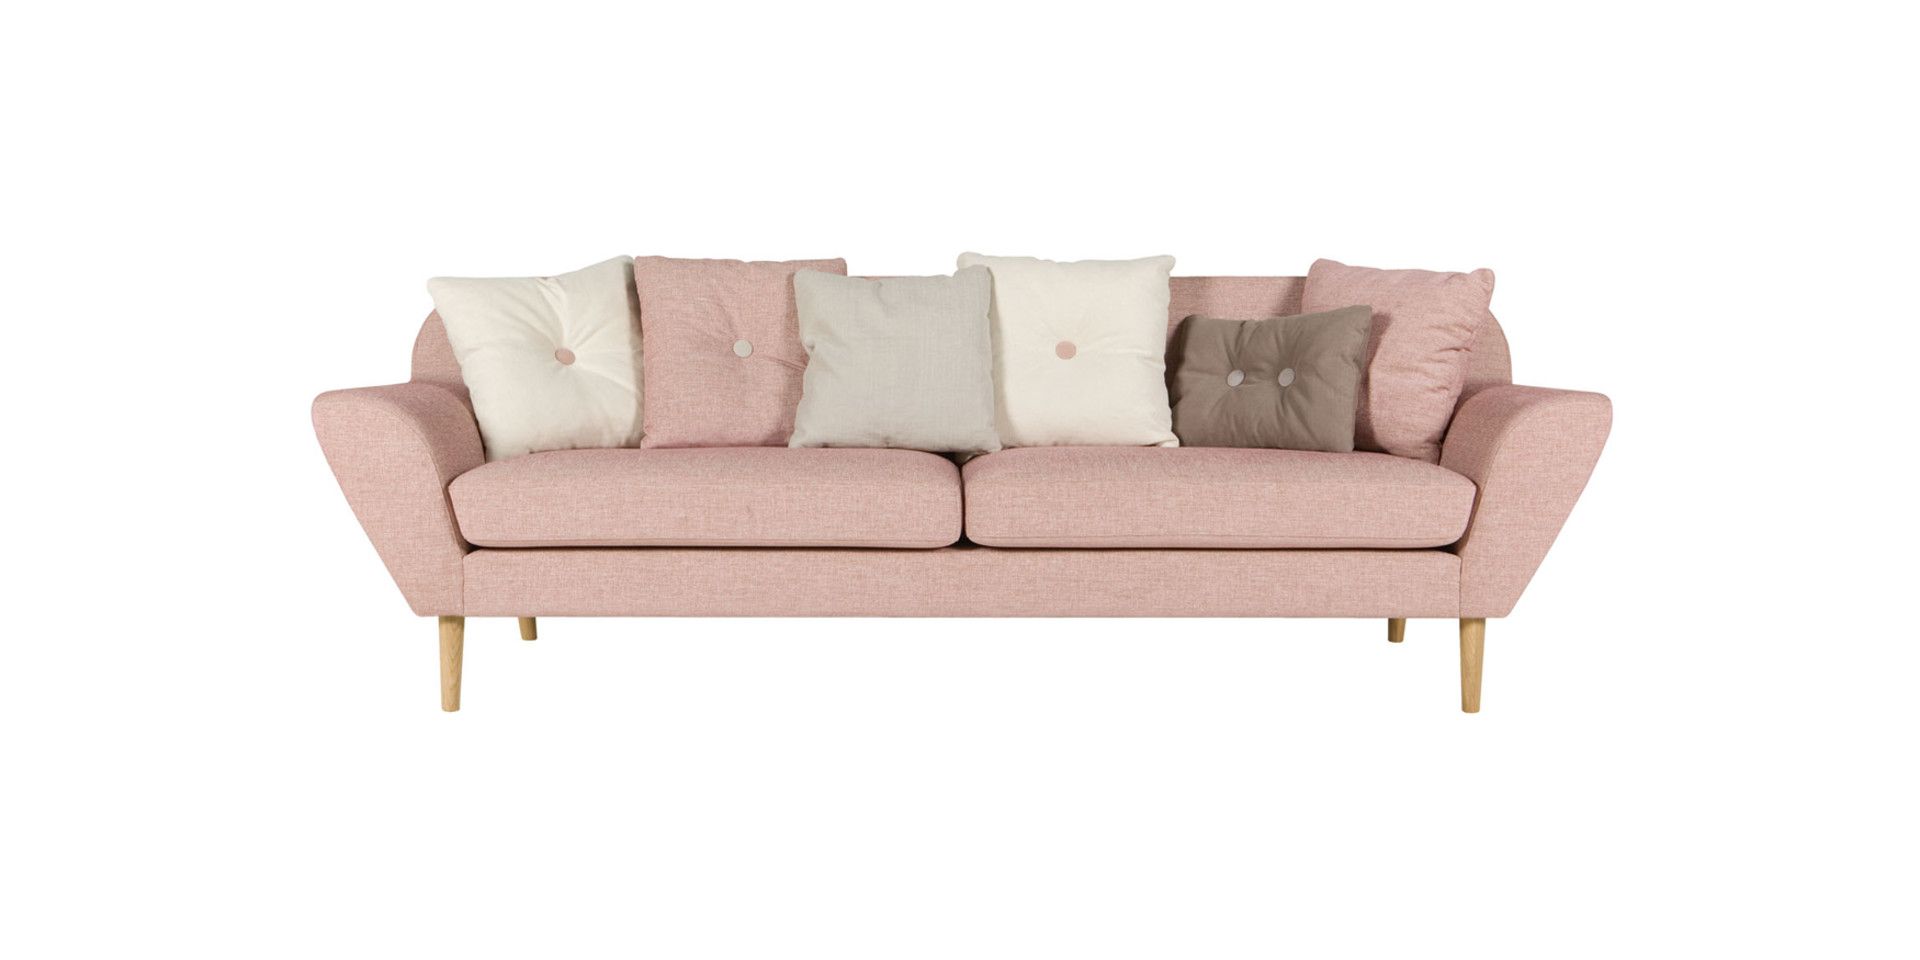 Sofa Poppy. Fot. Sits